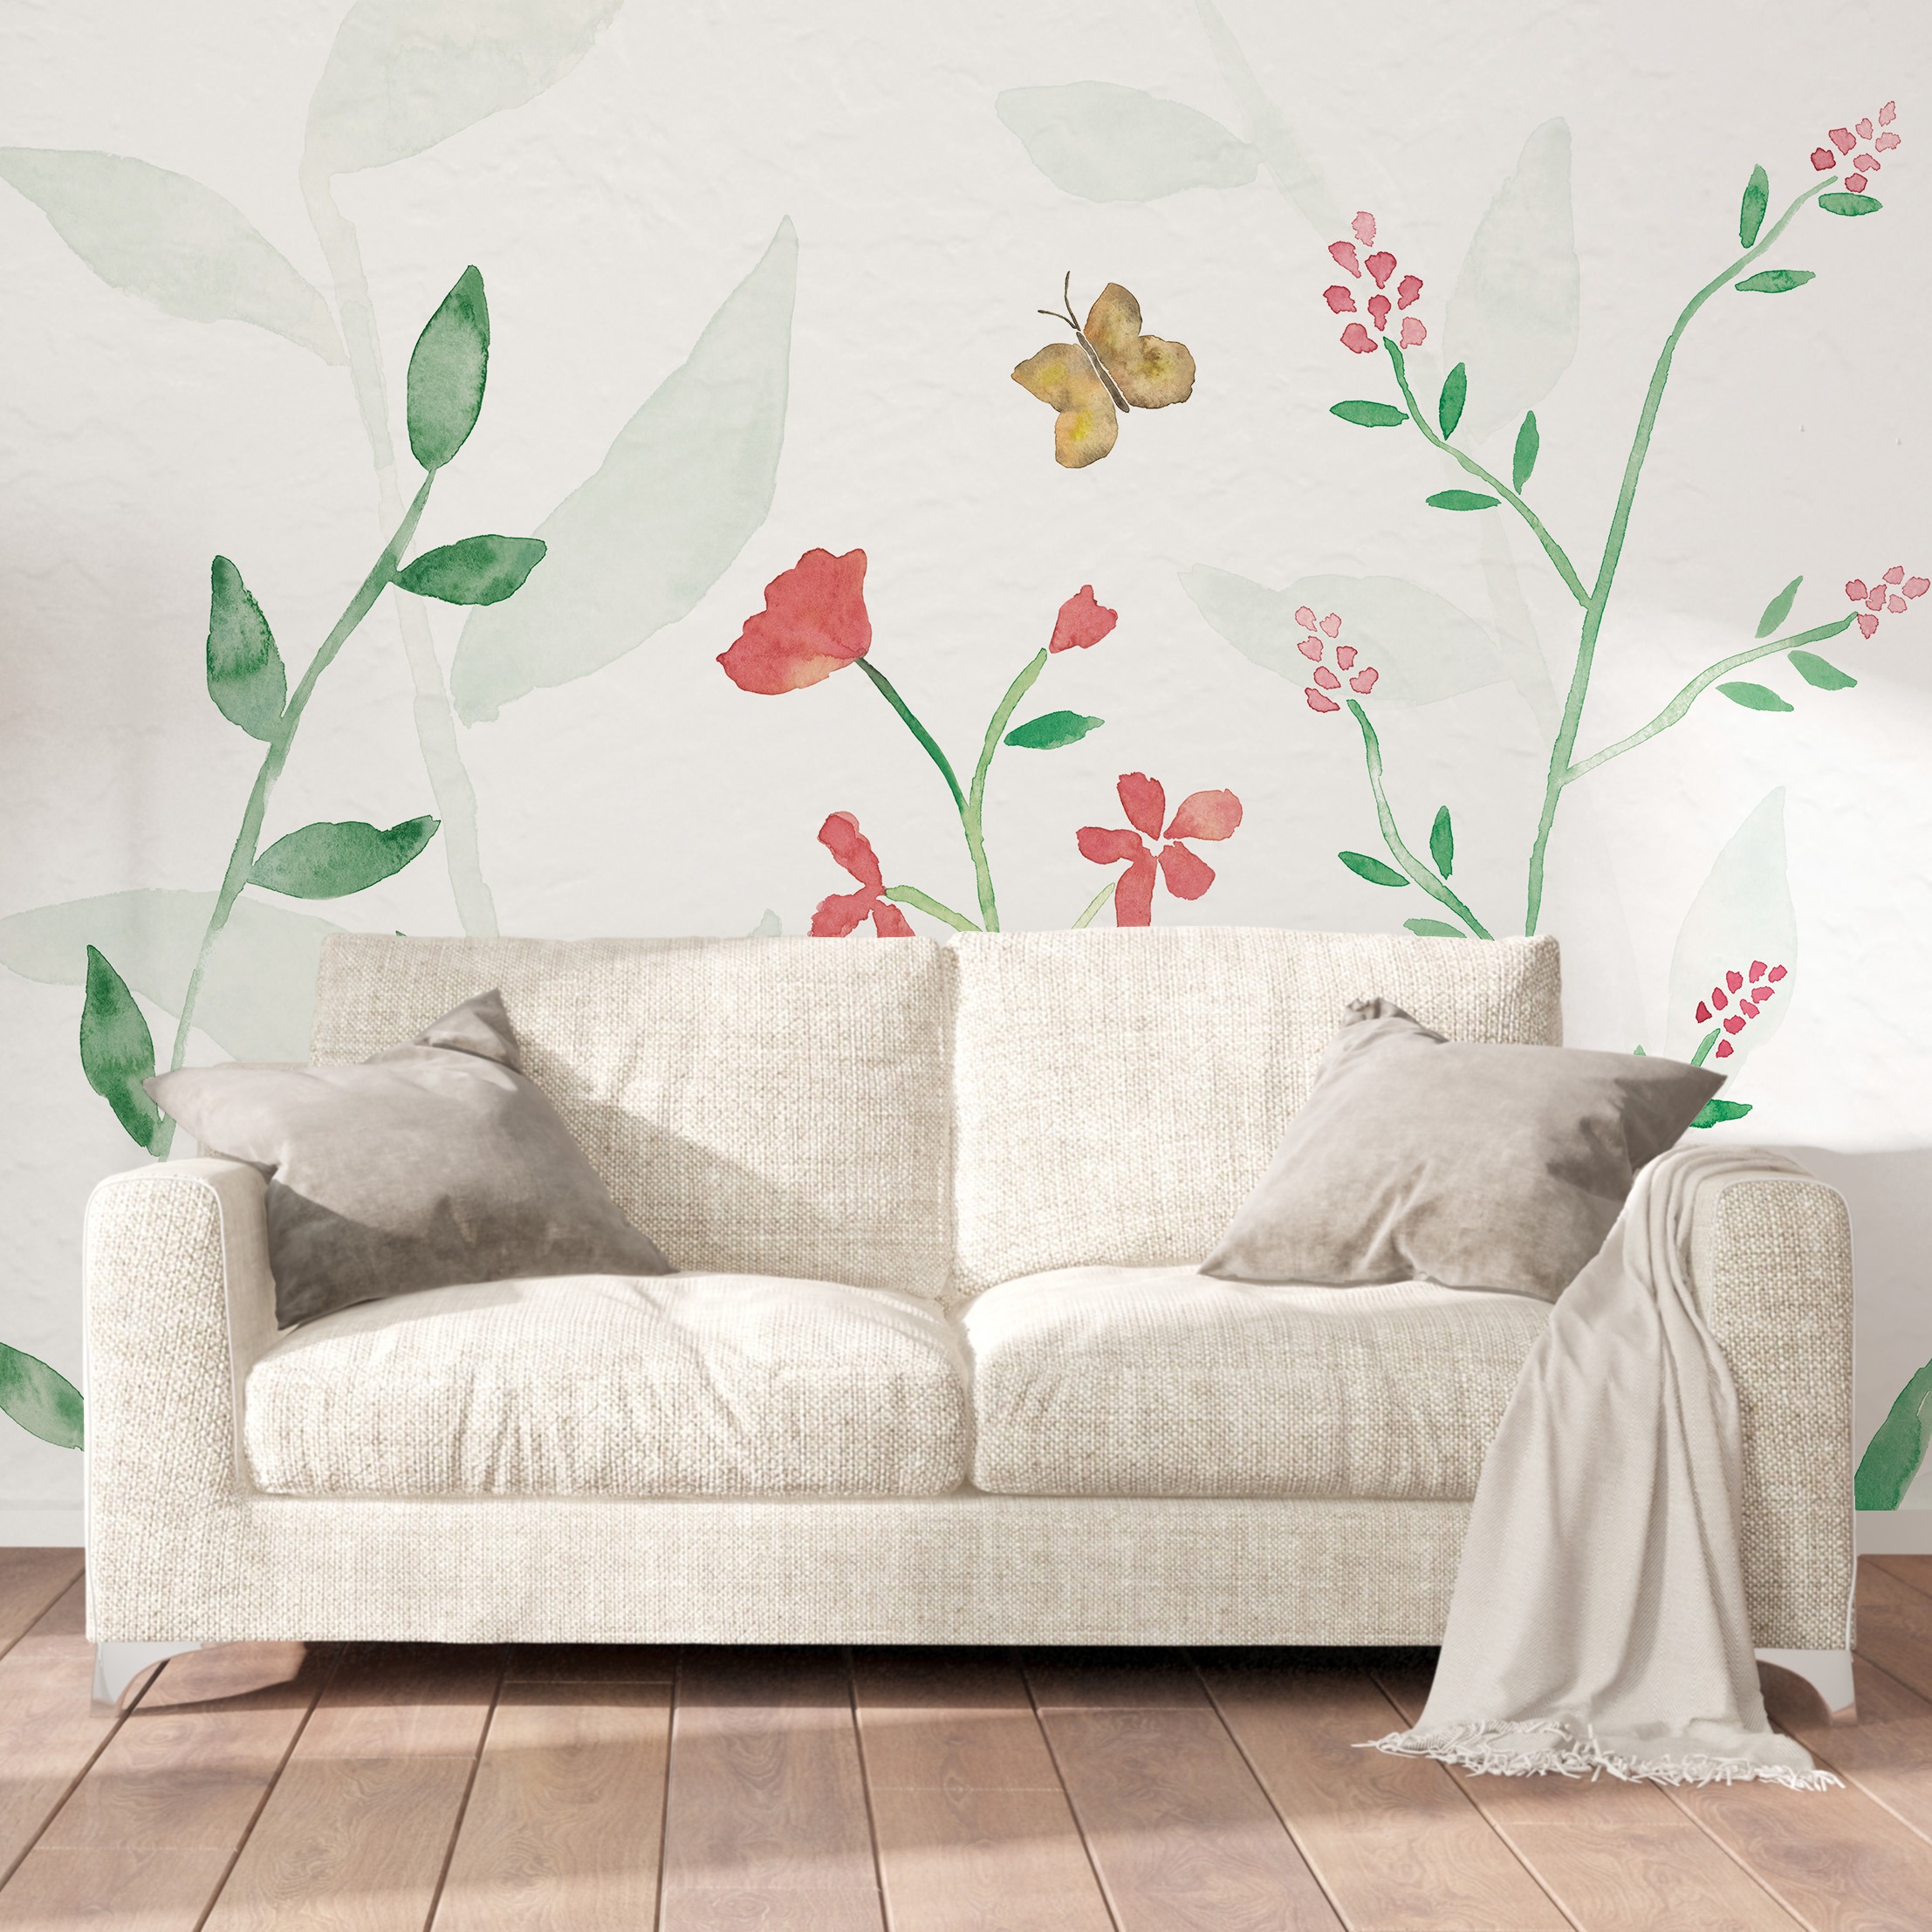 Wallpaper Home Decor by Cheryl Teo